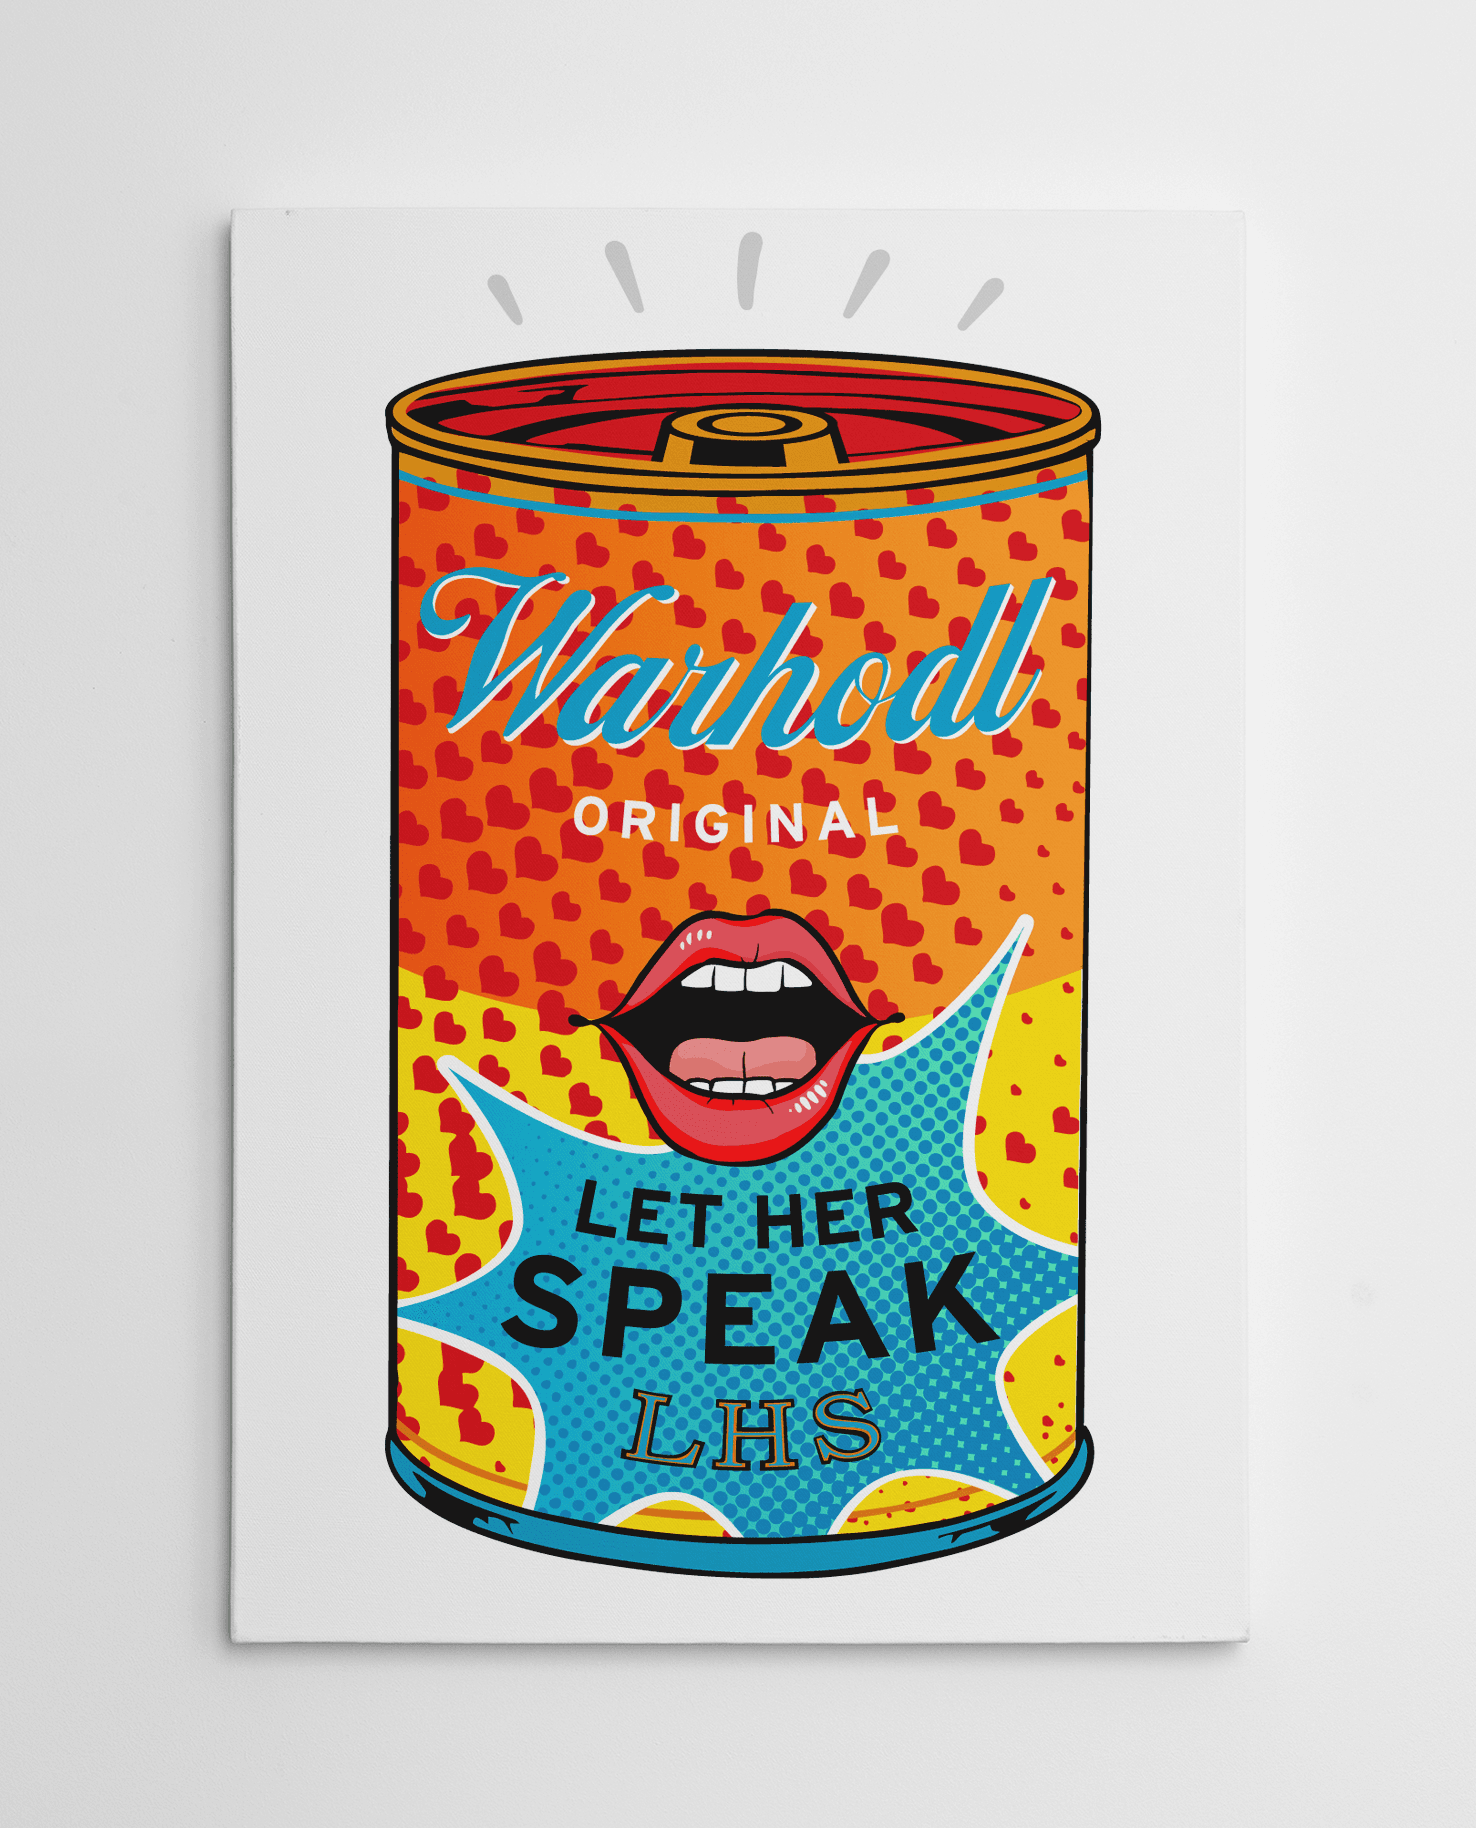 WARHODL Artist Proof "LET HER SPEAK" original can